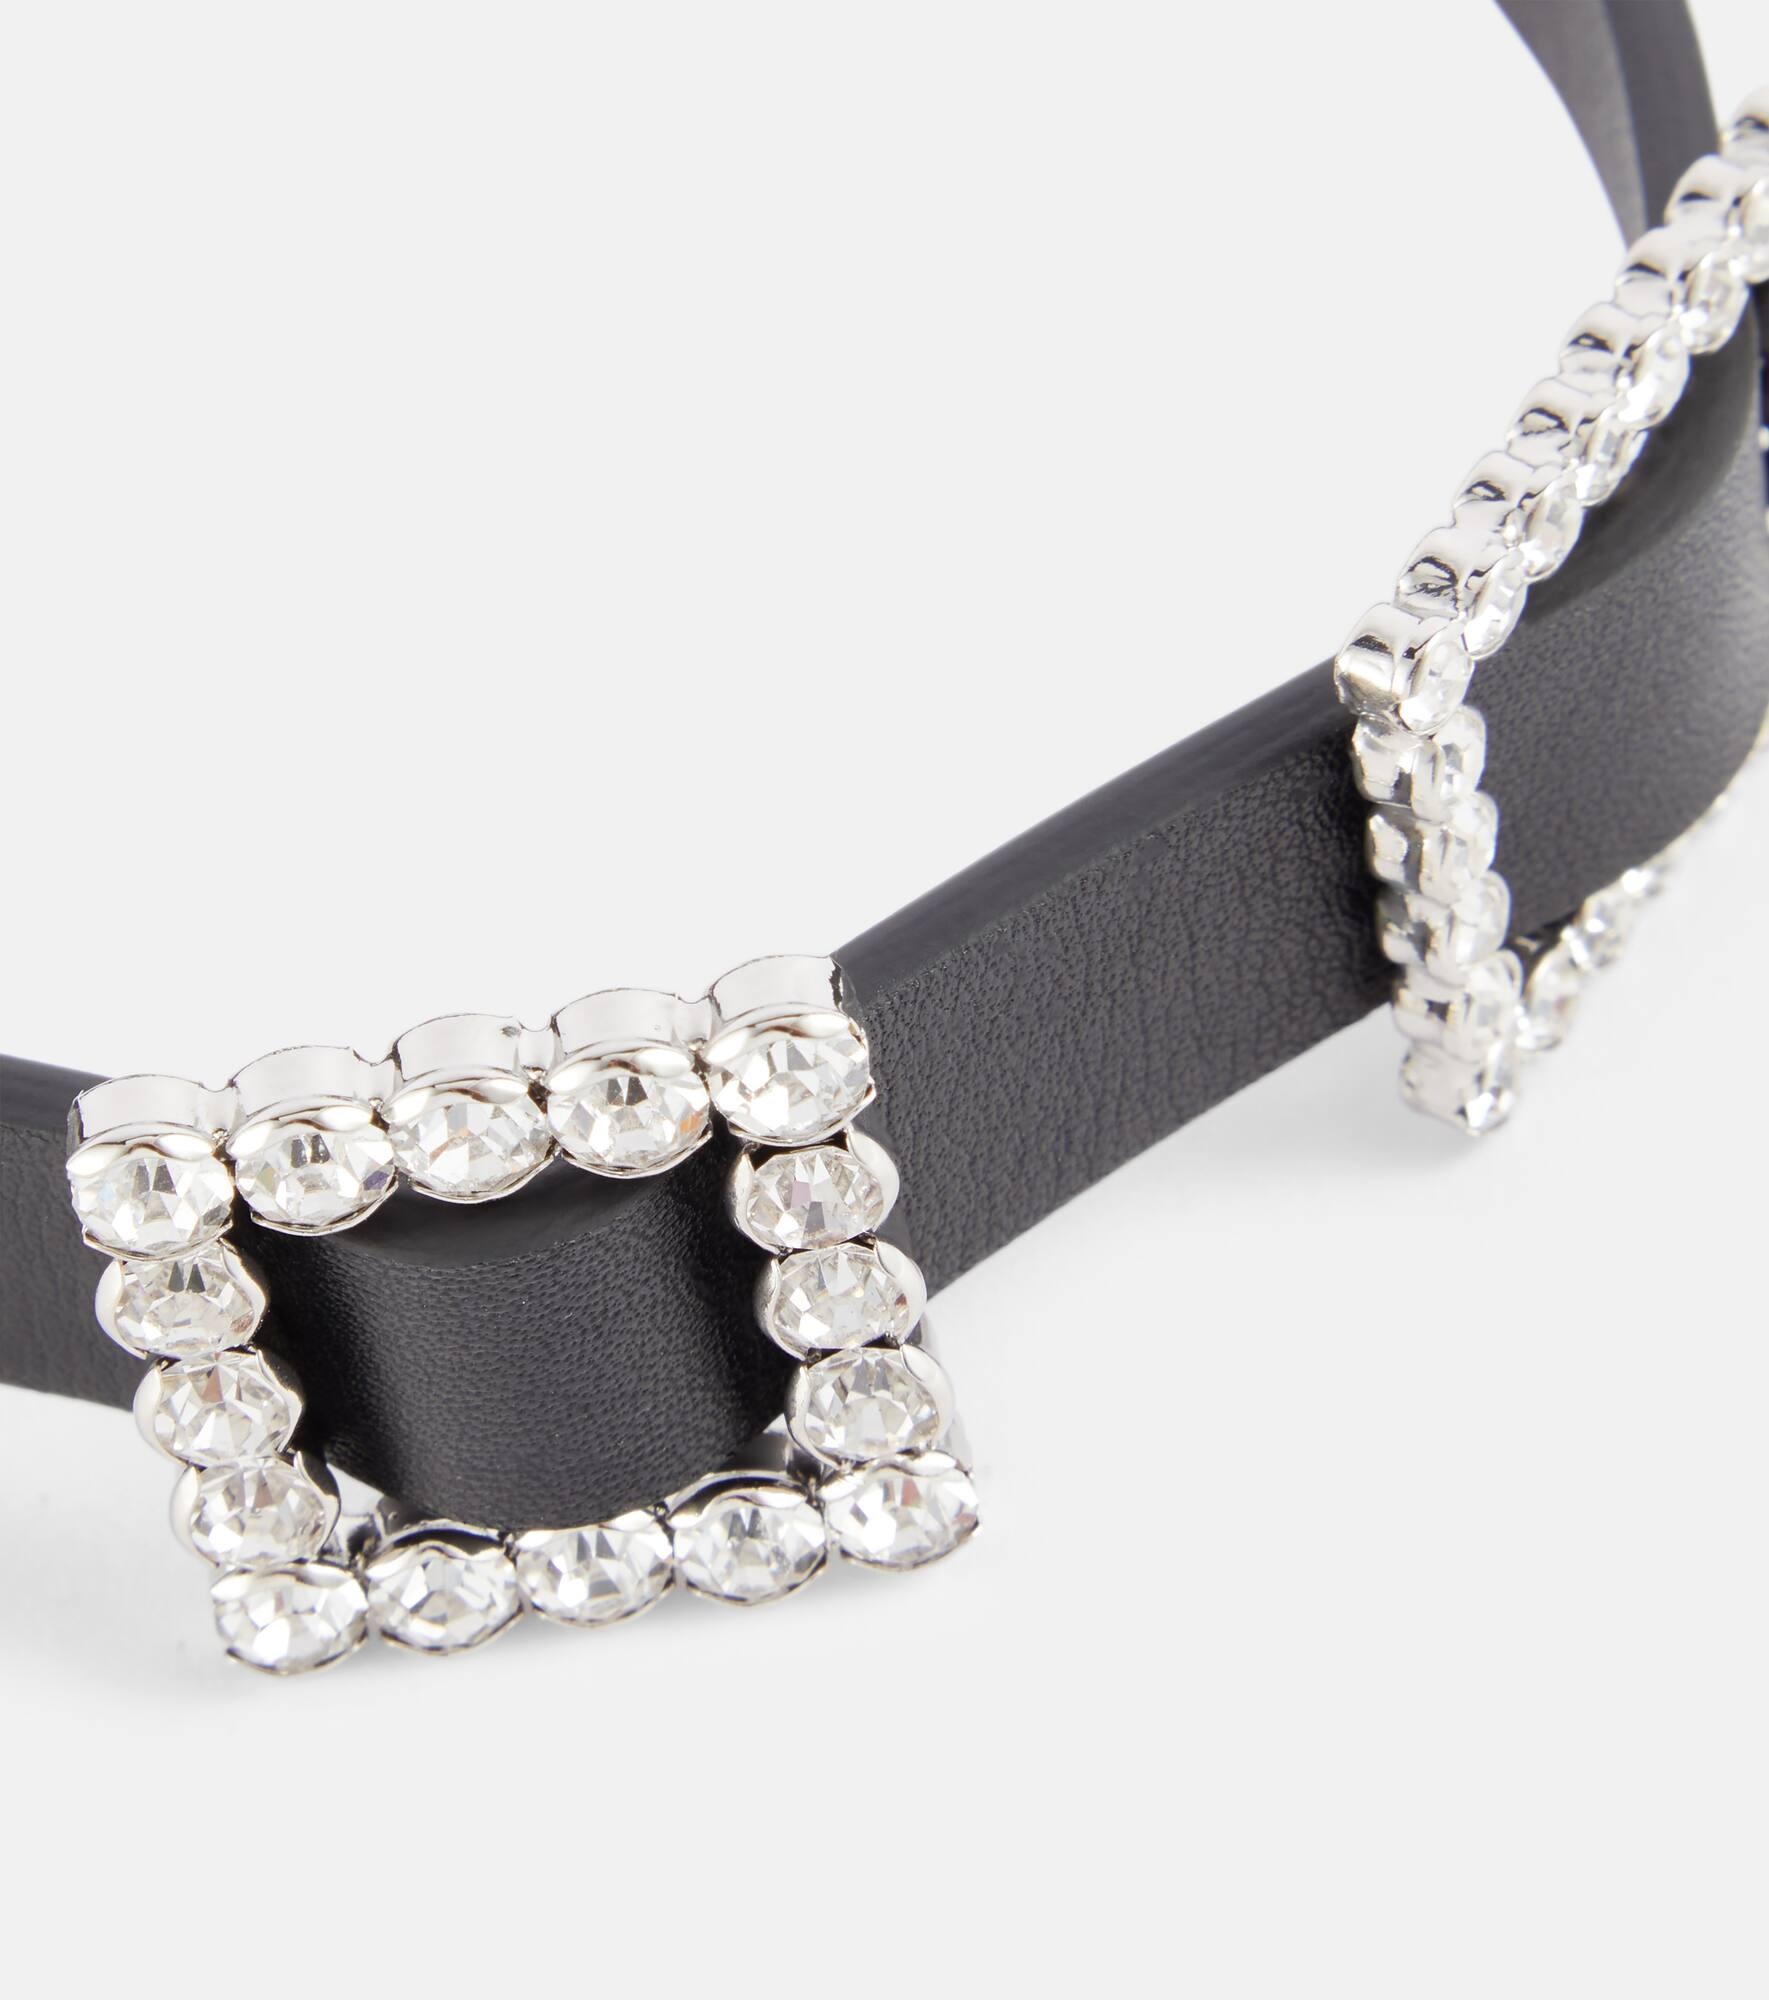 Embellished leather necklace - 4